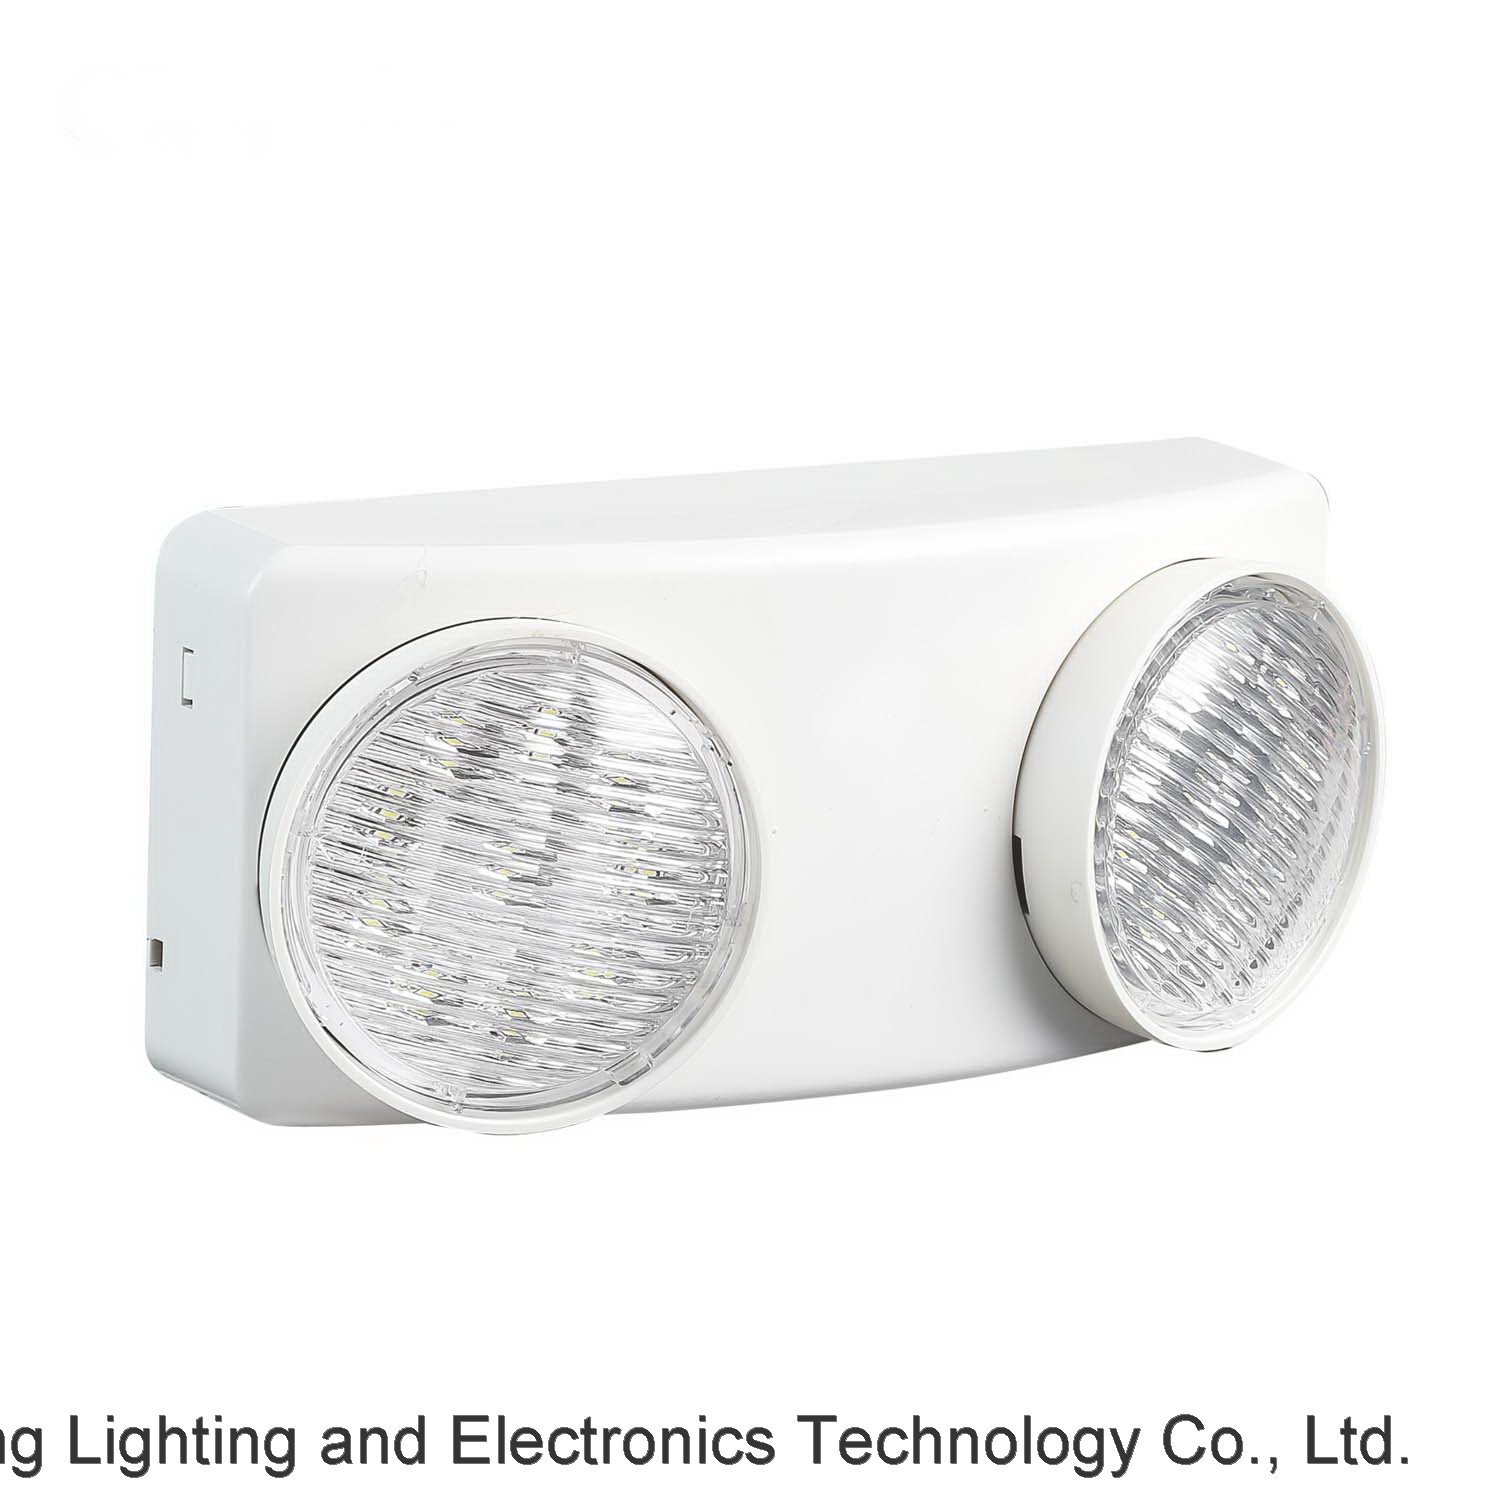 UL Listed LED Emergency Light CR-7009